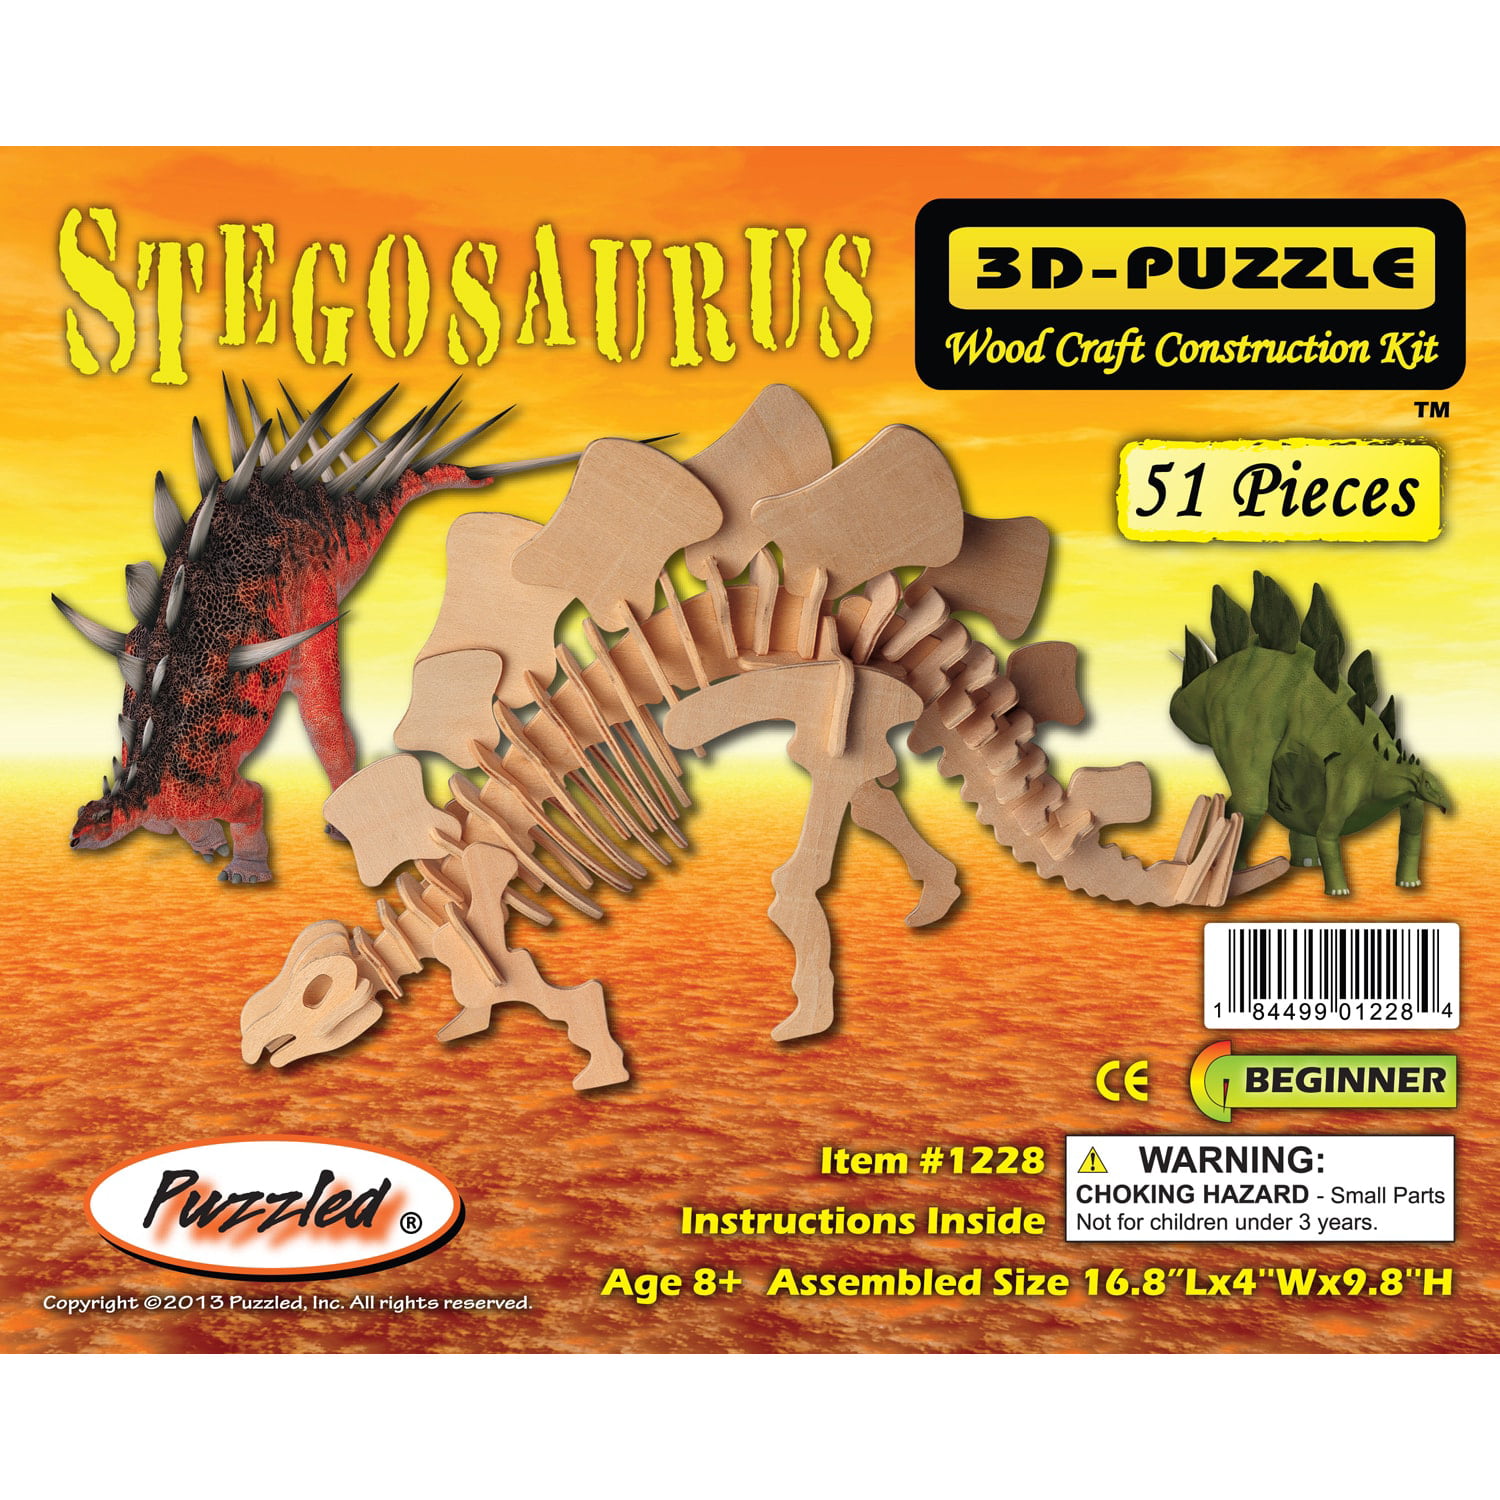 Puzzled Velociraptor Tyrannosaurus Wooden 3D Puzzle Construction K Stegosaurus 